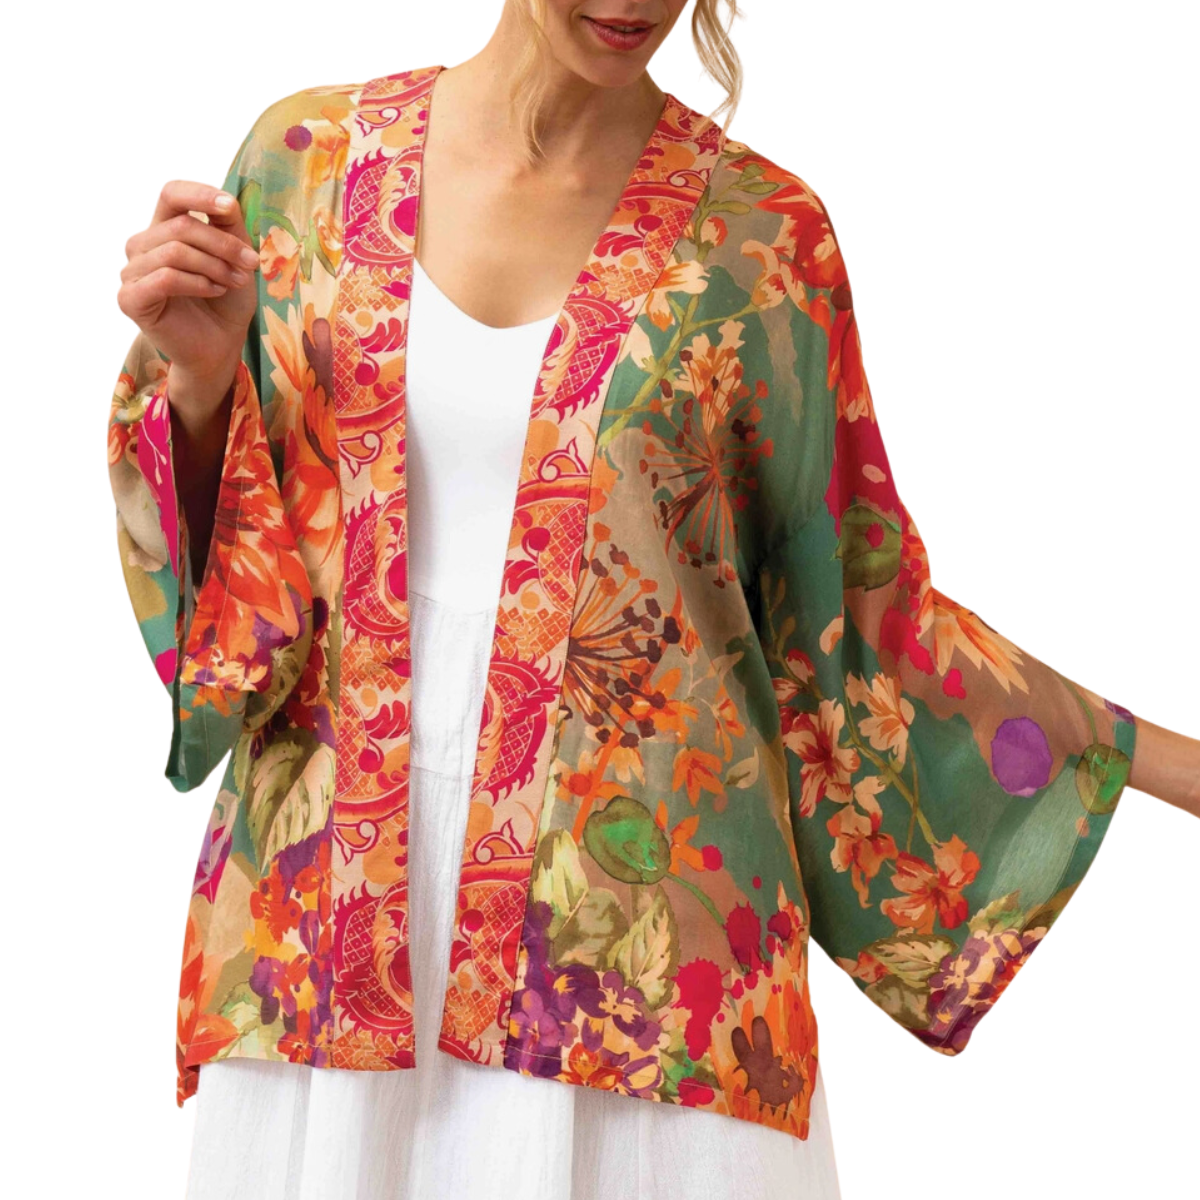 Colorful Floral Kimono jacket